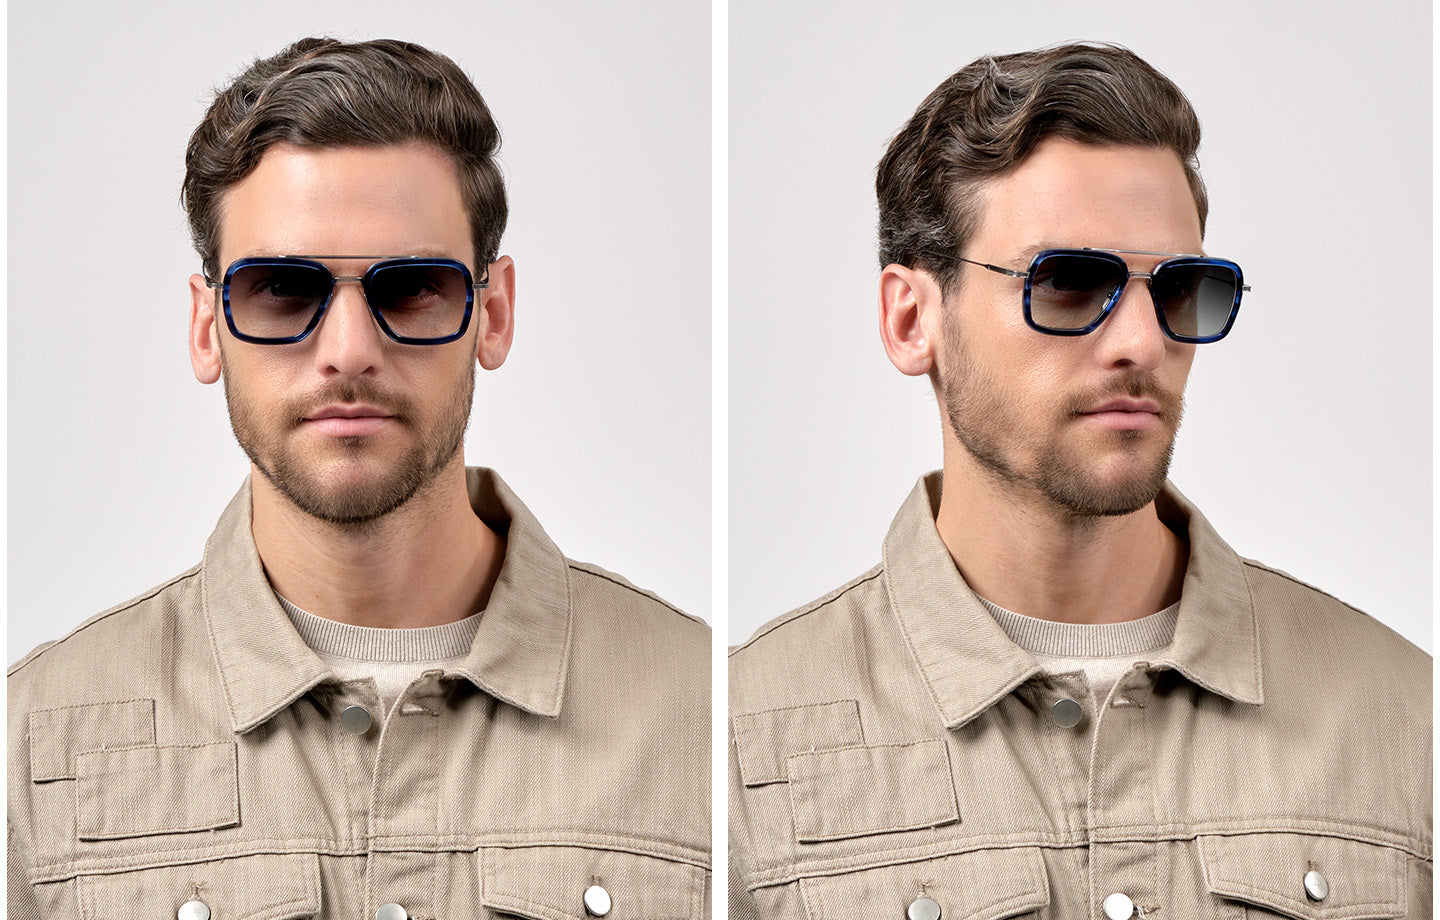 Men's Sunglasses – Page 6 - DITA Eyewear Official